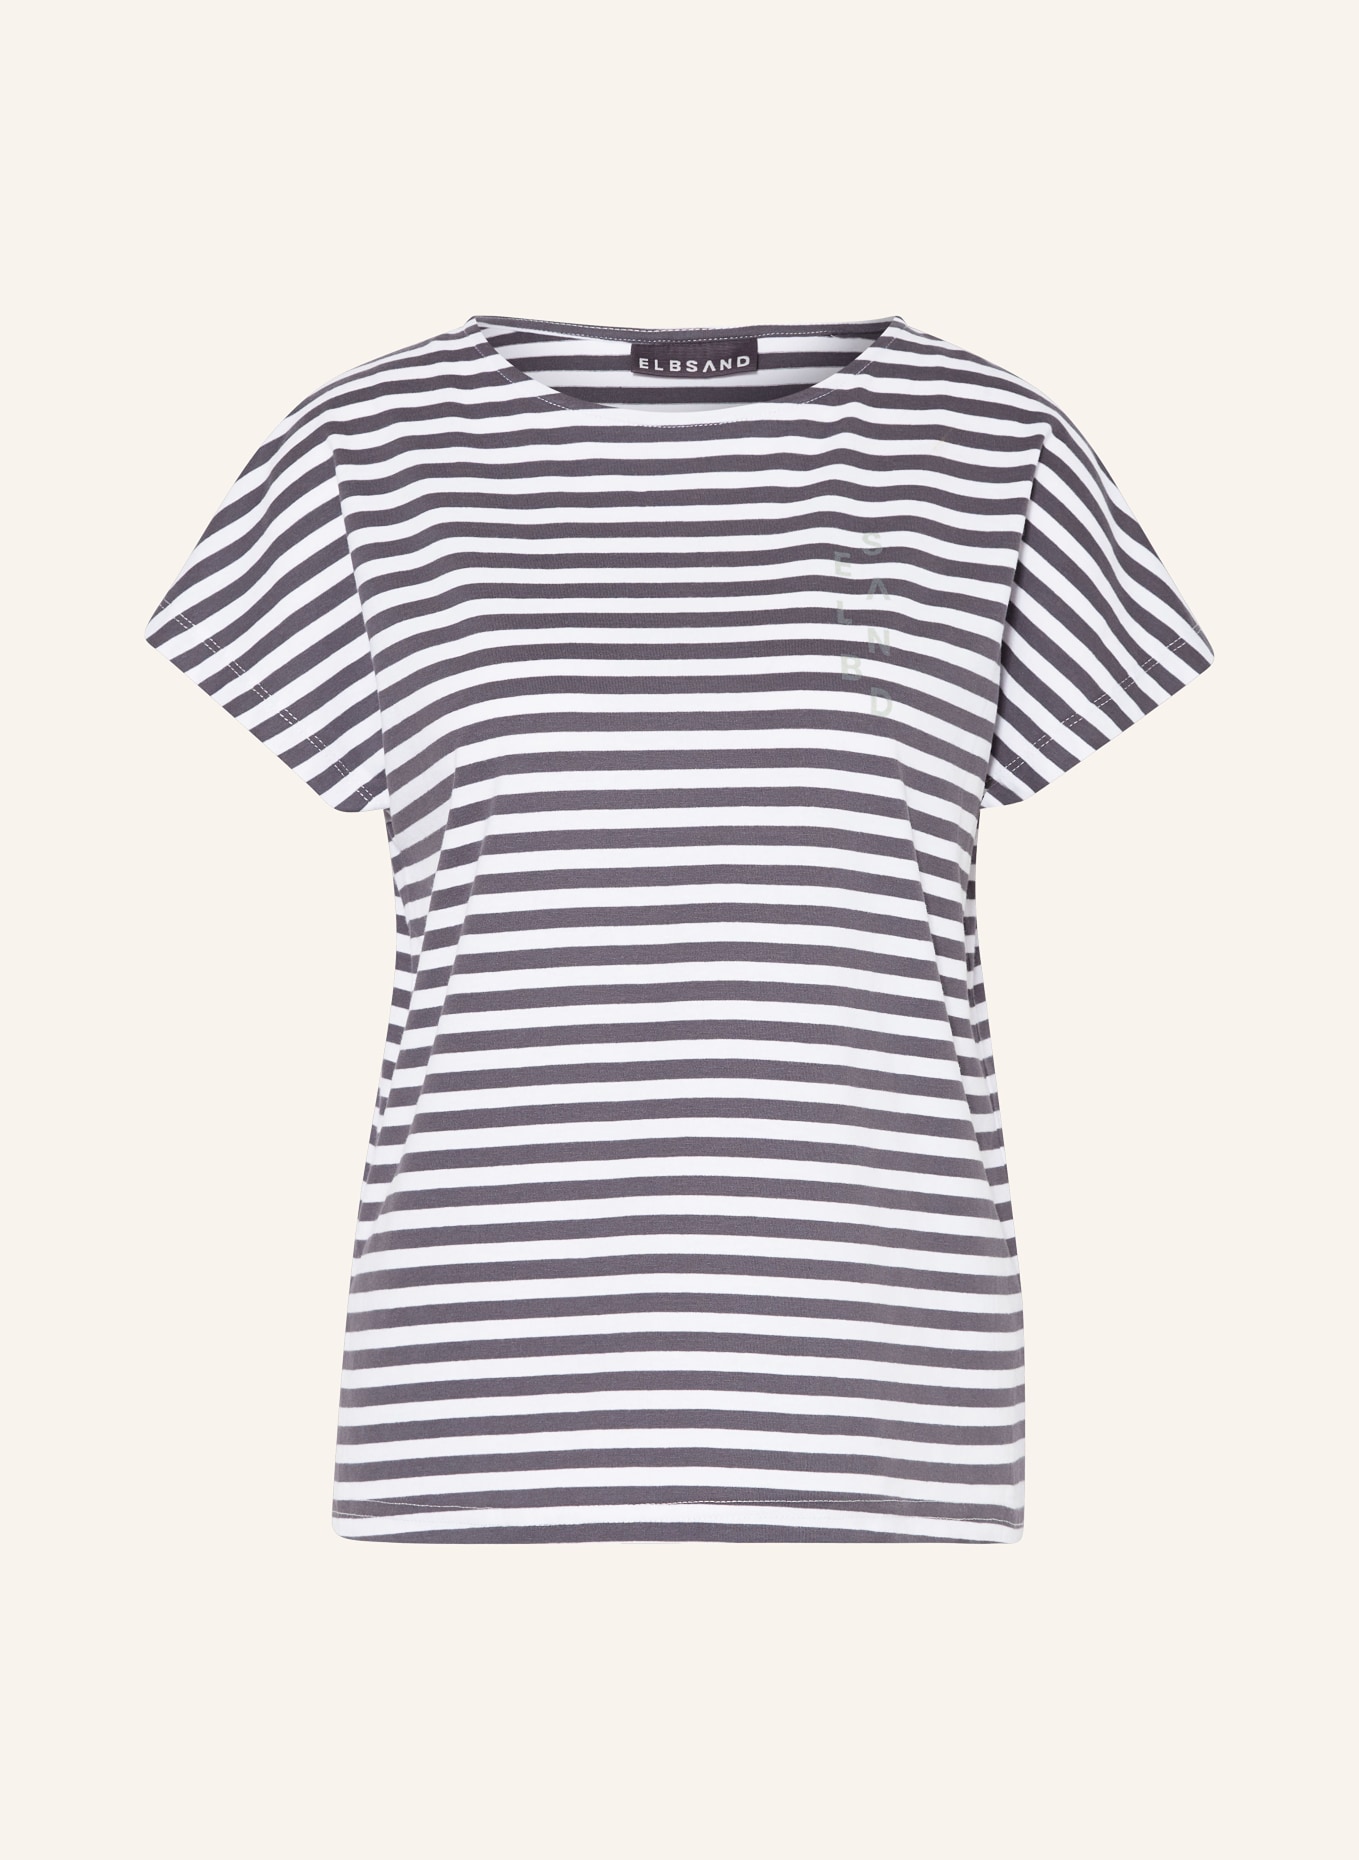 ELBSAND T-Shirt SELMA, Farbe: DUNKELGRAU/ WEISS (Bild 1)